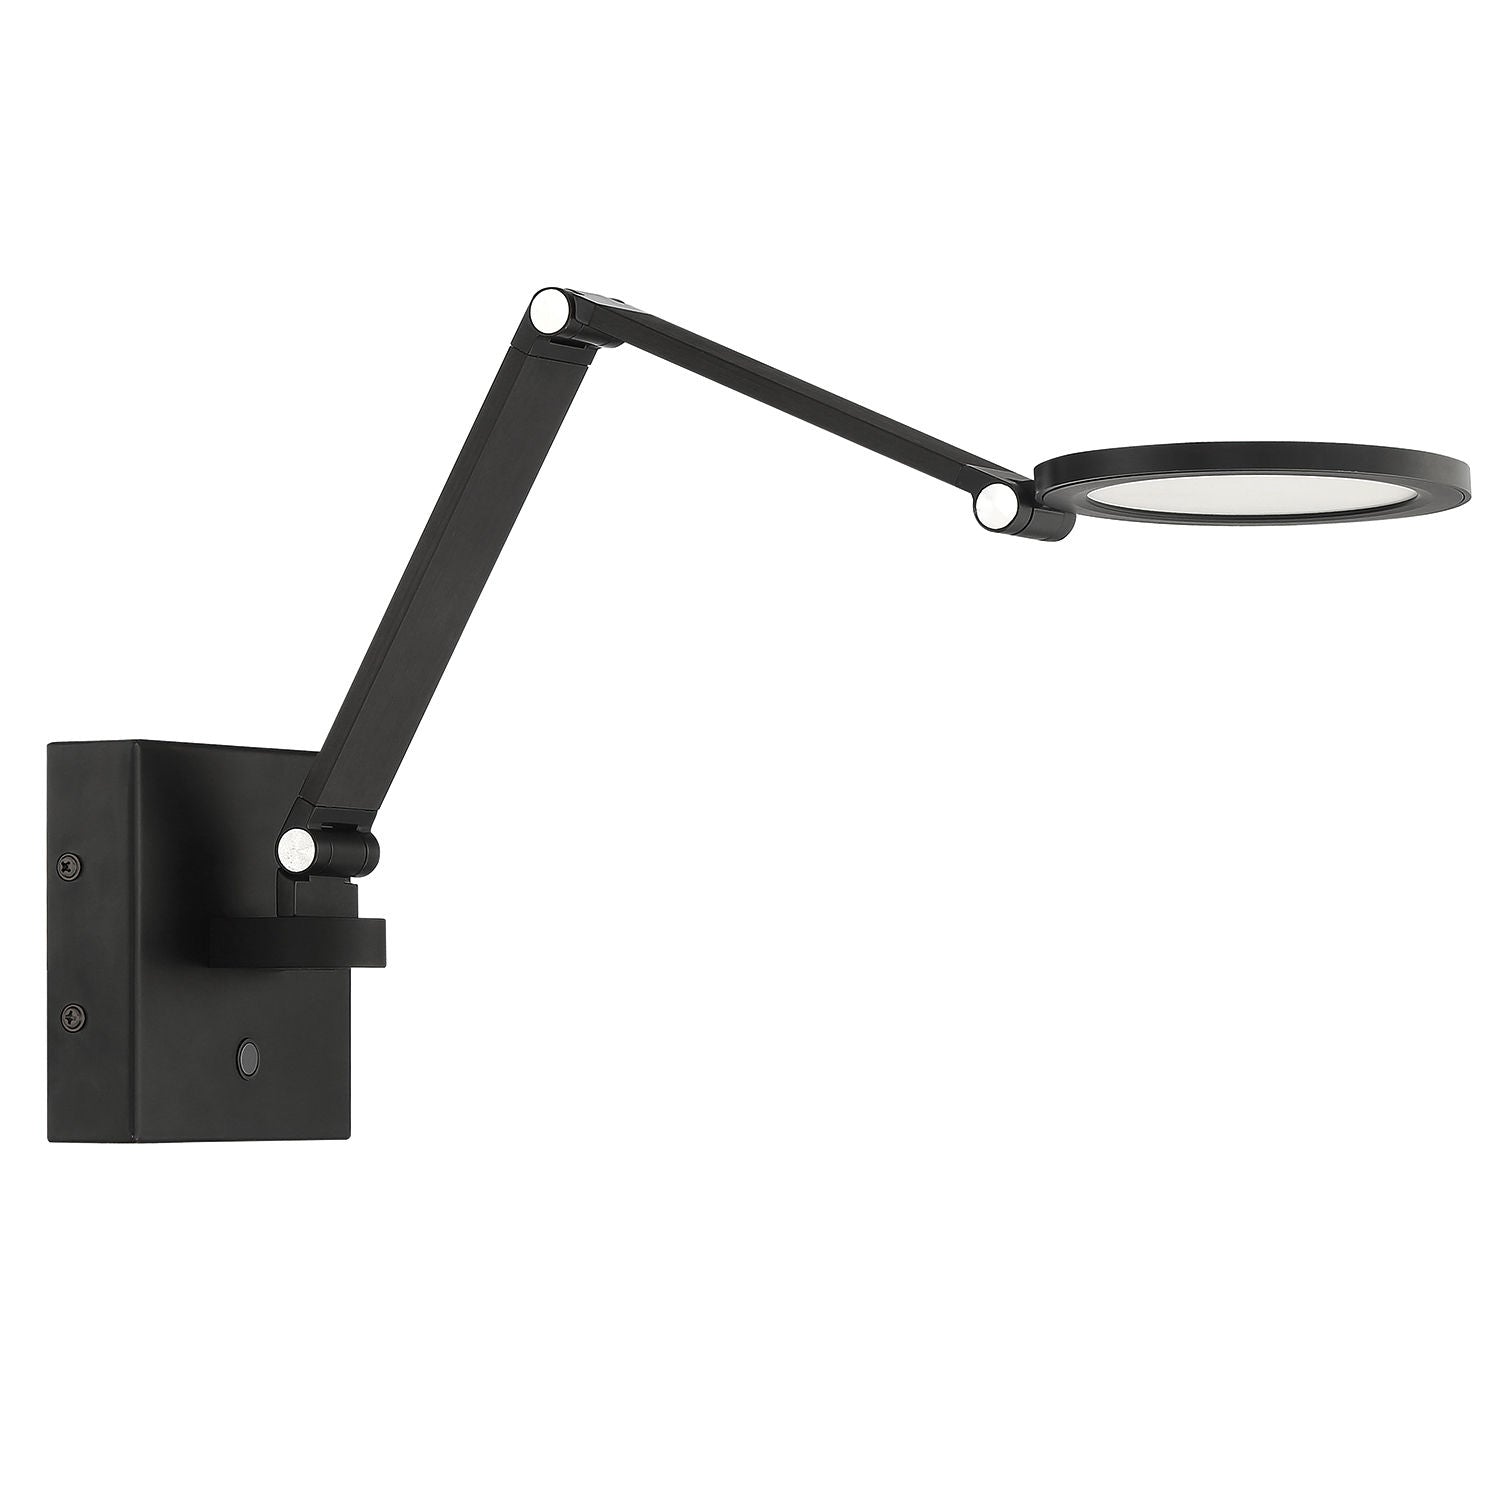 Orientable sconce Black INTEGRATED LED - SA101-BLK | KENDAL